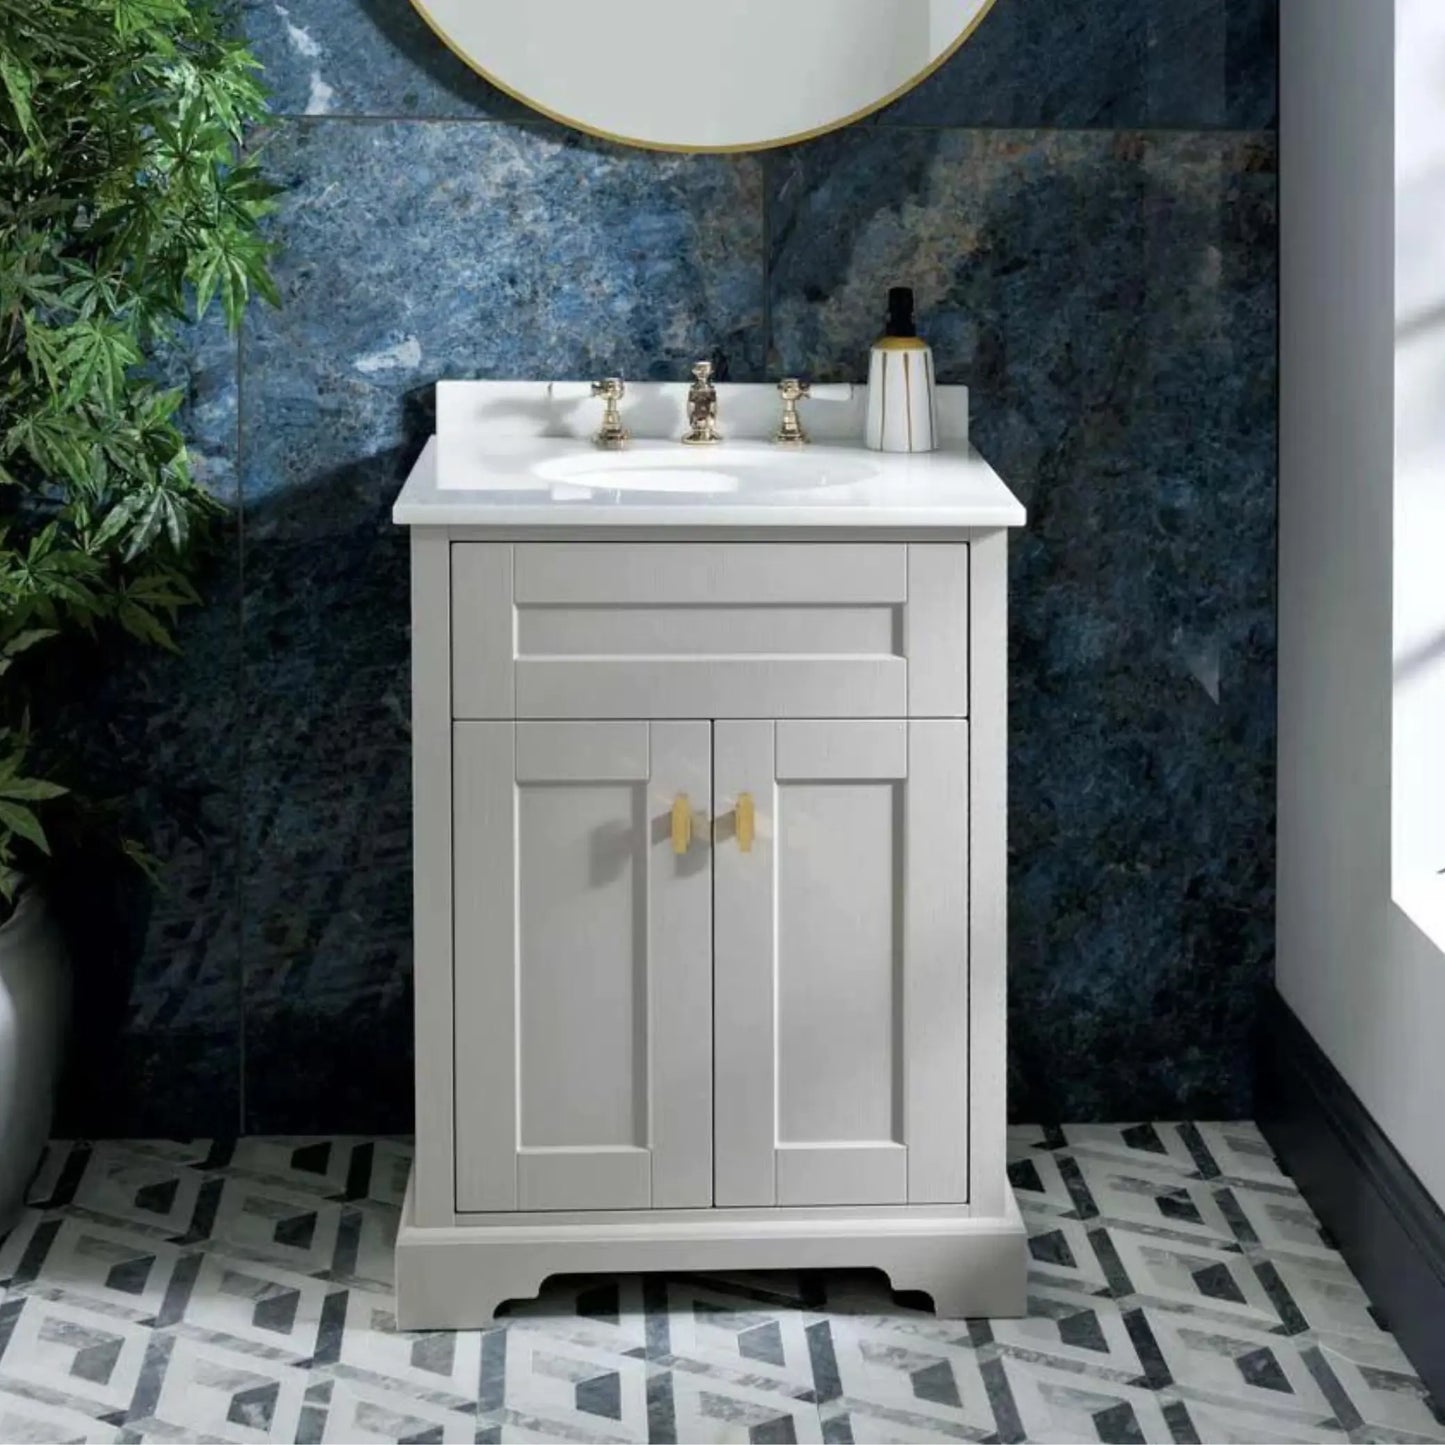 BC Designs, Victrion 2 Door Bathroom Vanity Unit & Marble Basin, Earl's Grey, 620mm BC Designs vanity unit